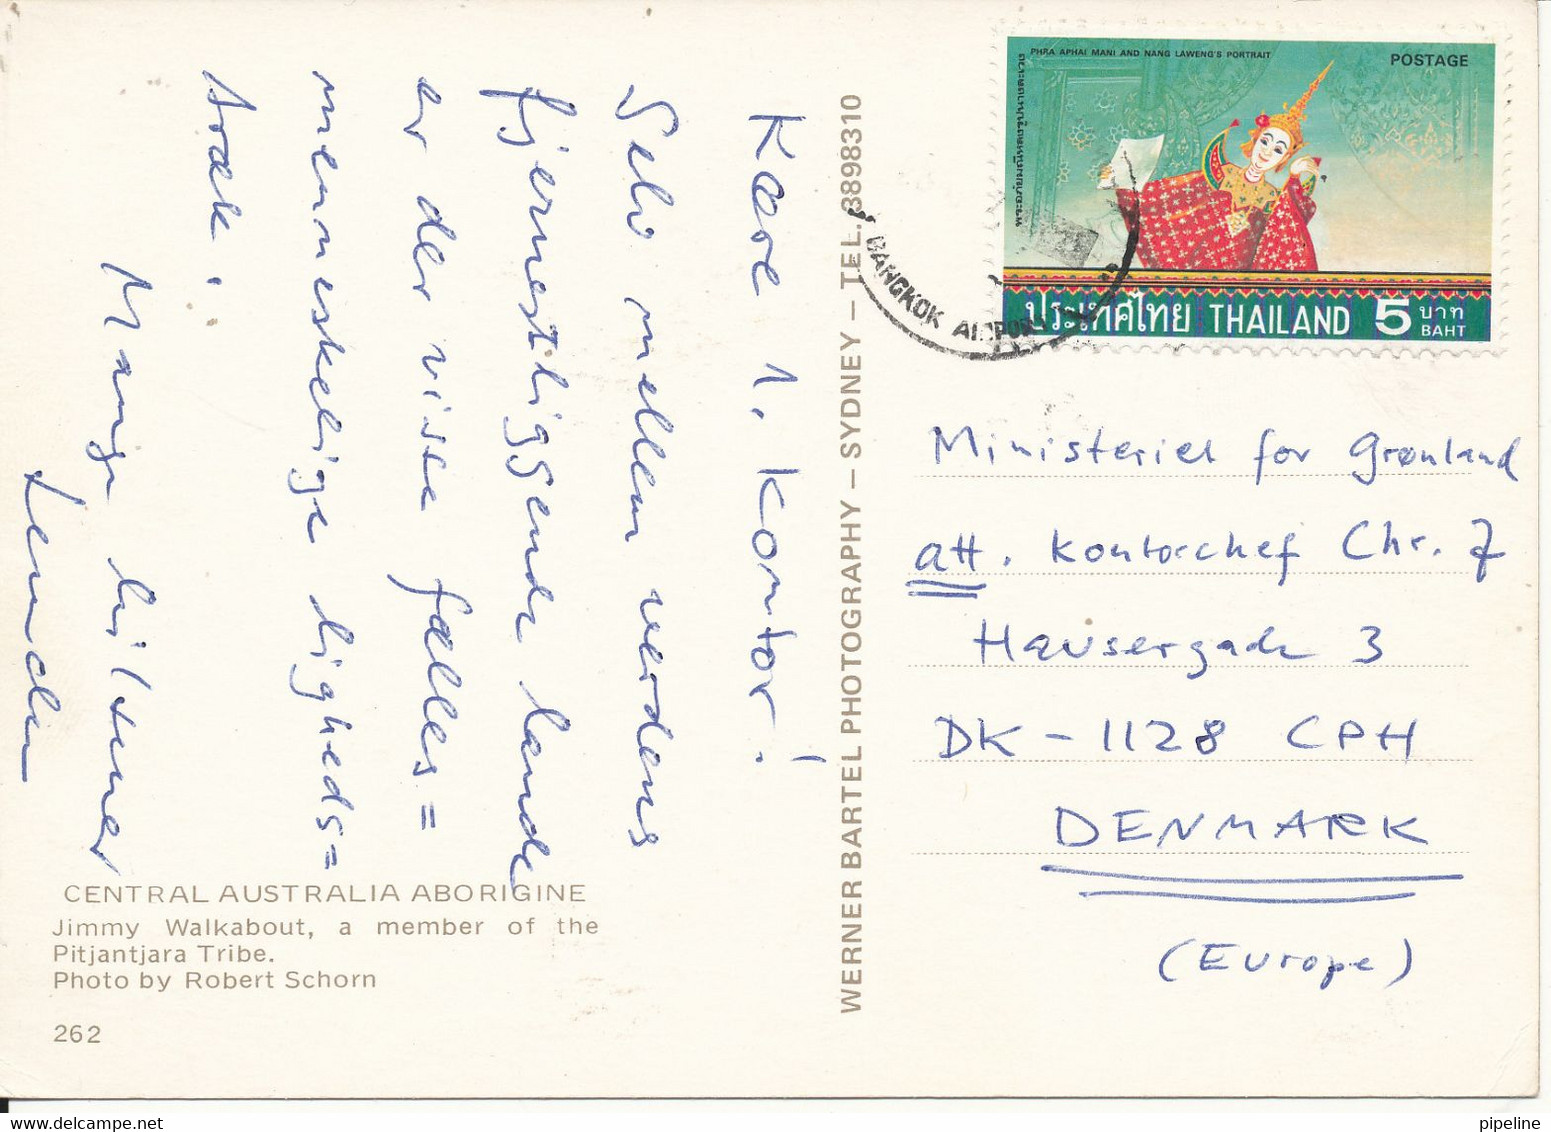 Australian Postcard Sent To Denmark With Thailand Stamp (Central Australia Aborigine) - Aborigènes